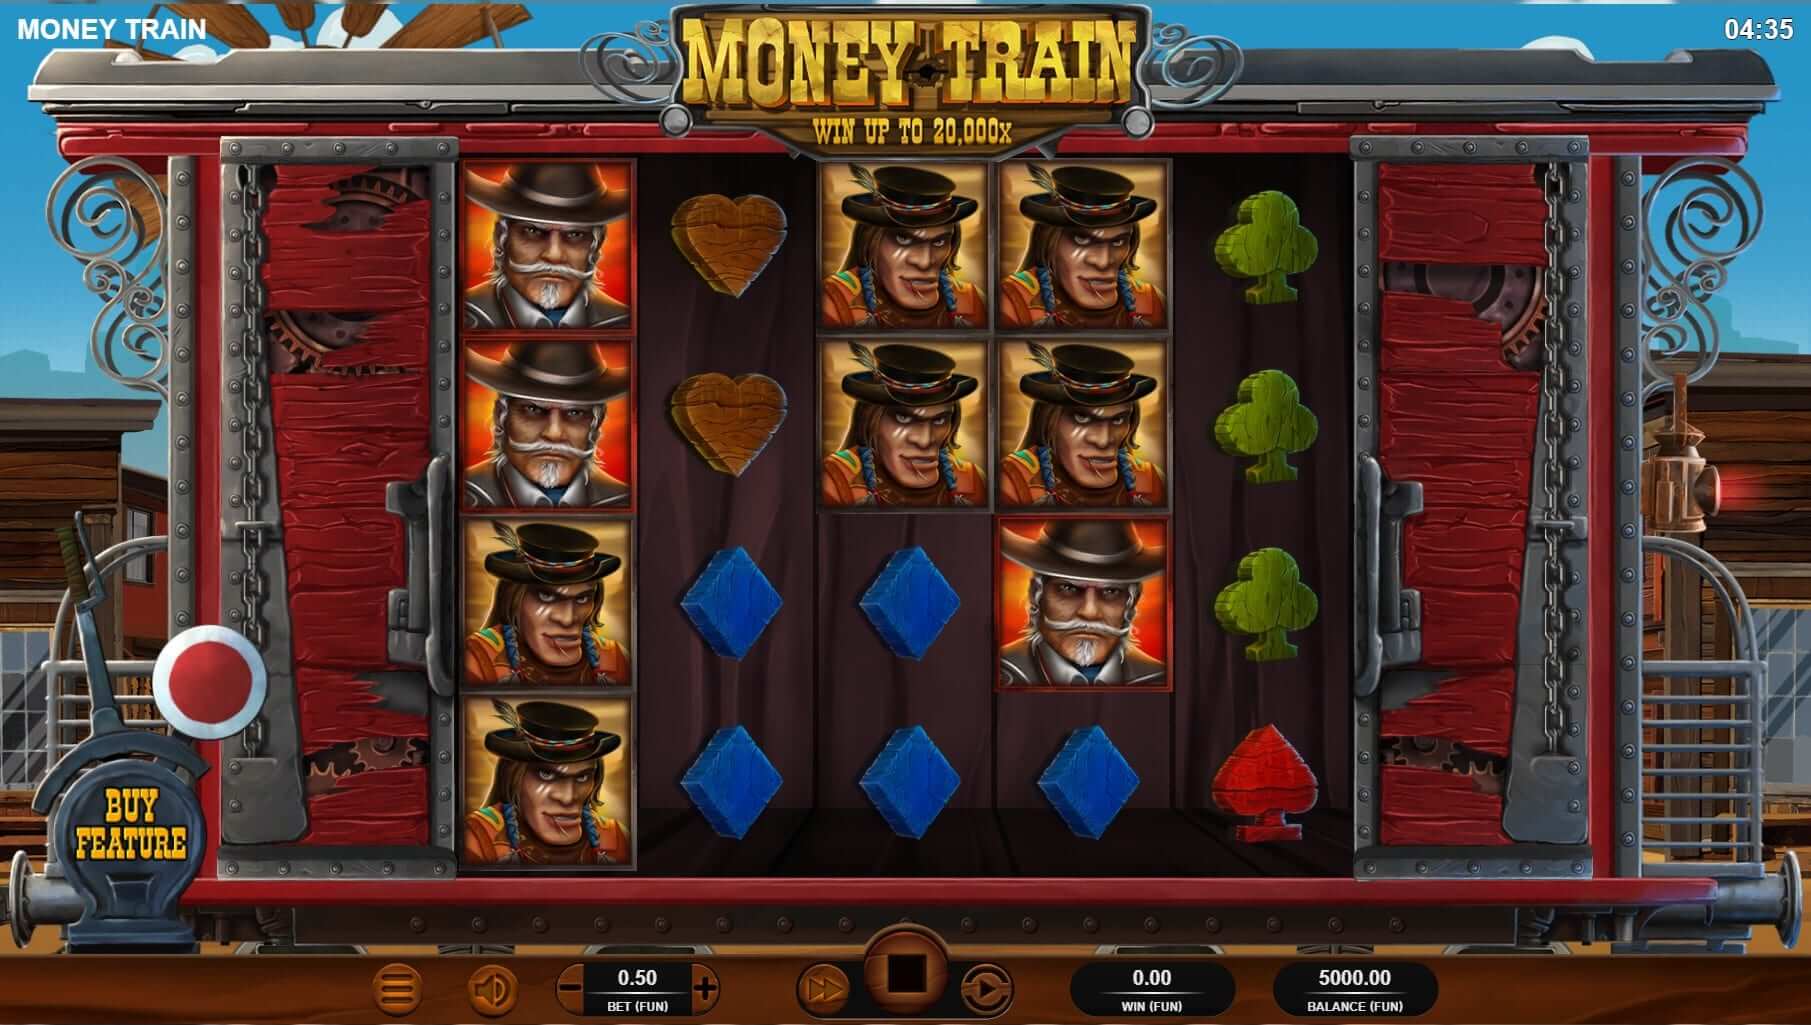 Money train